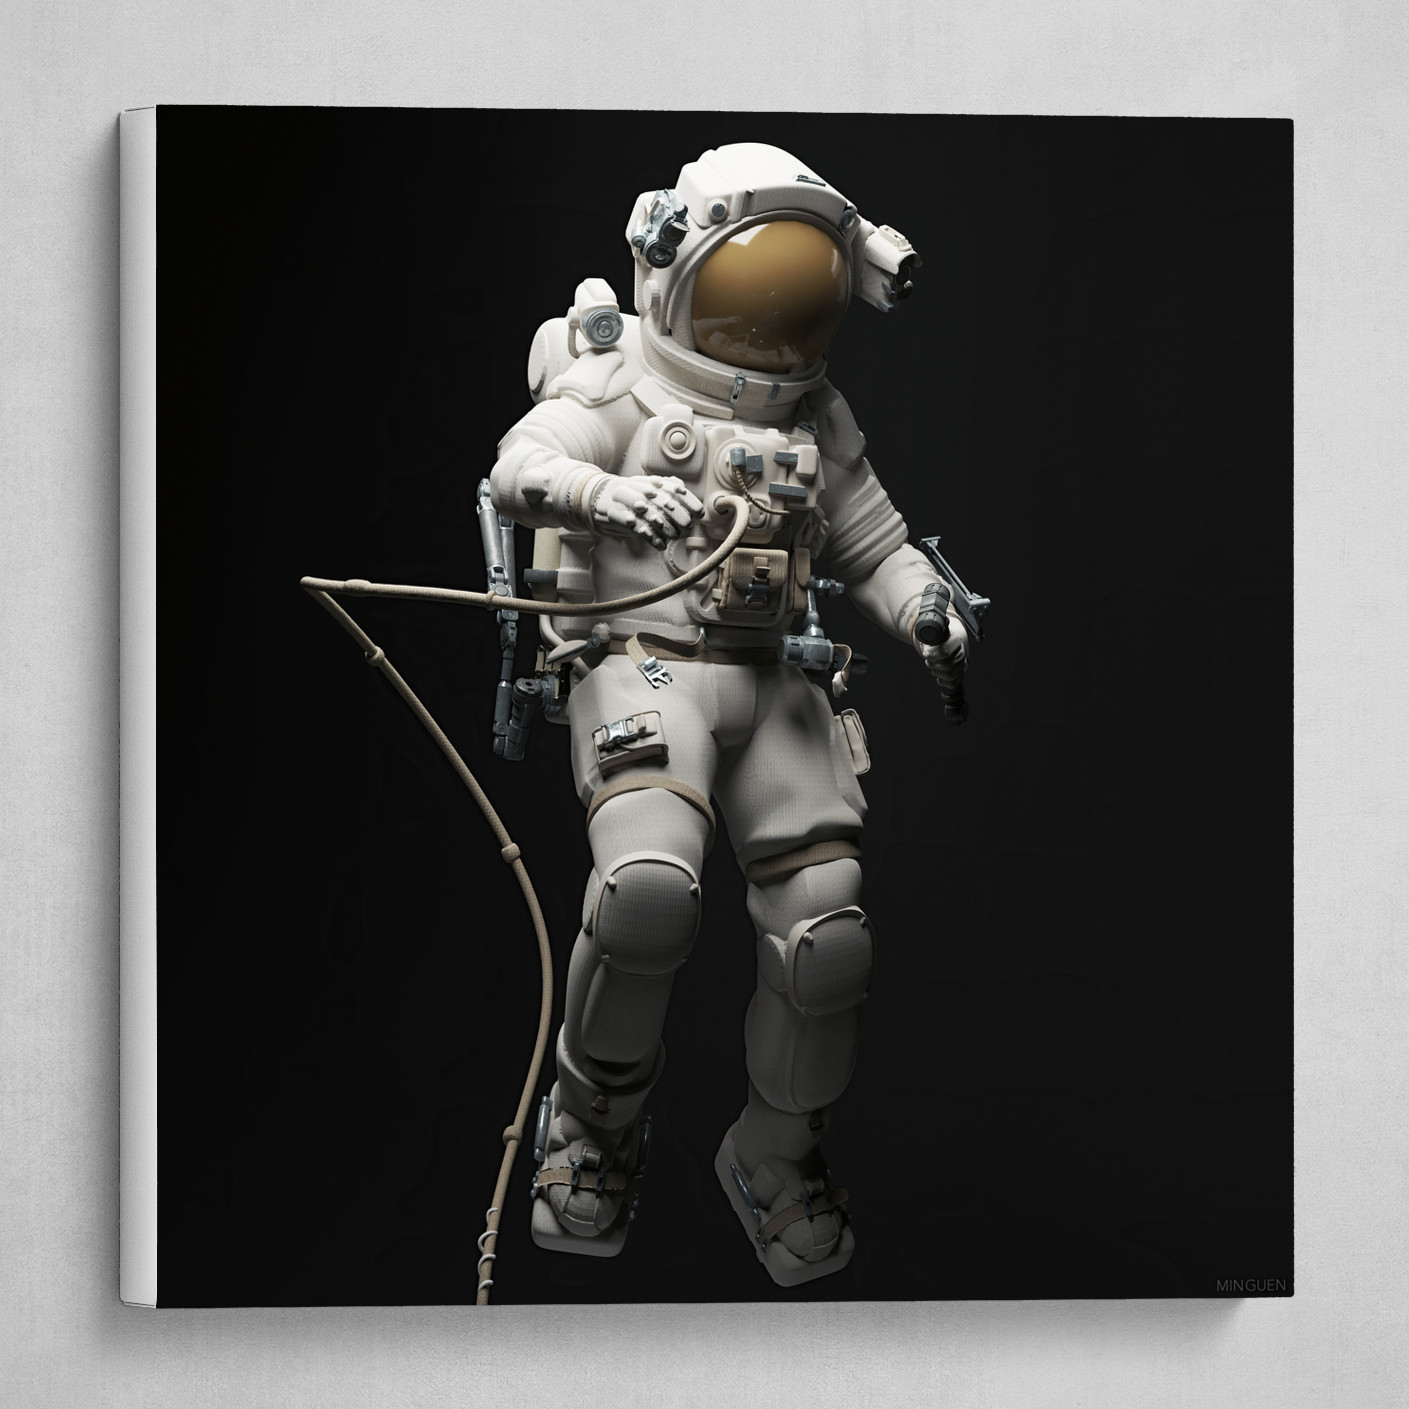 Astronaut_2